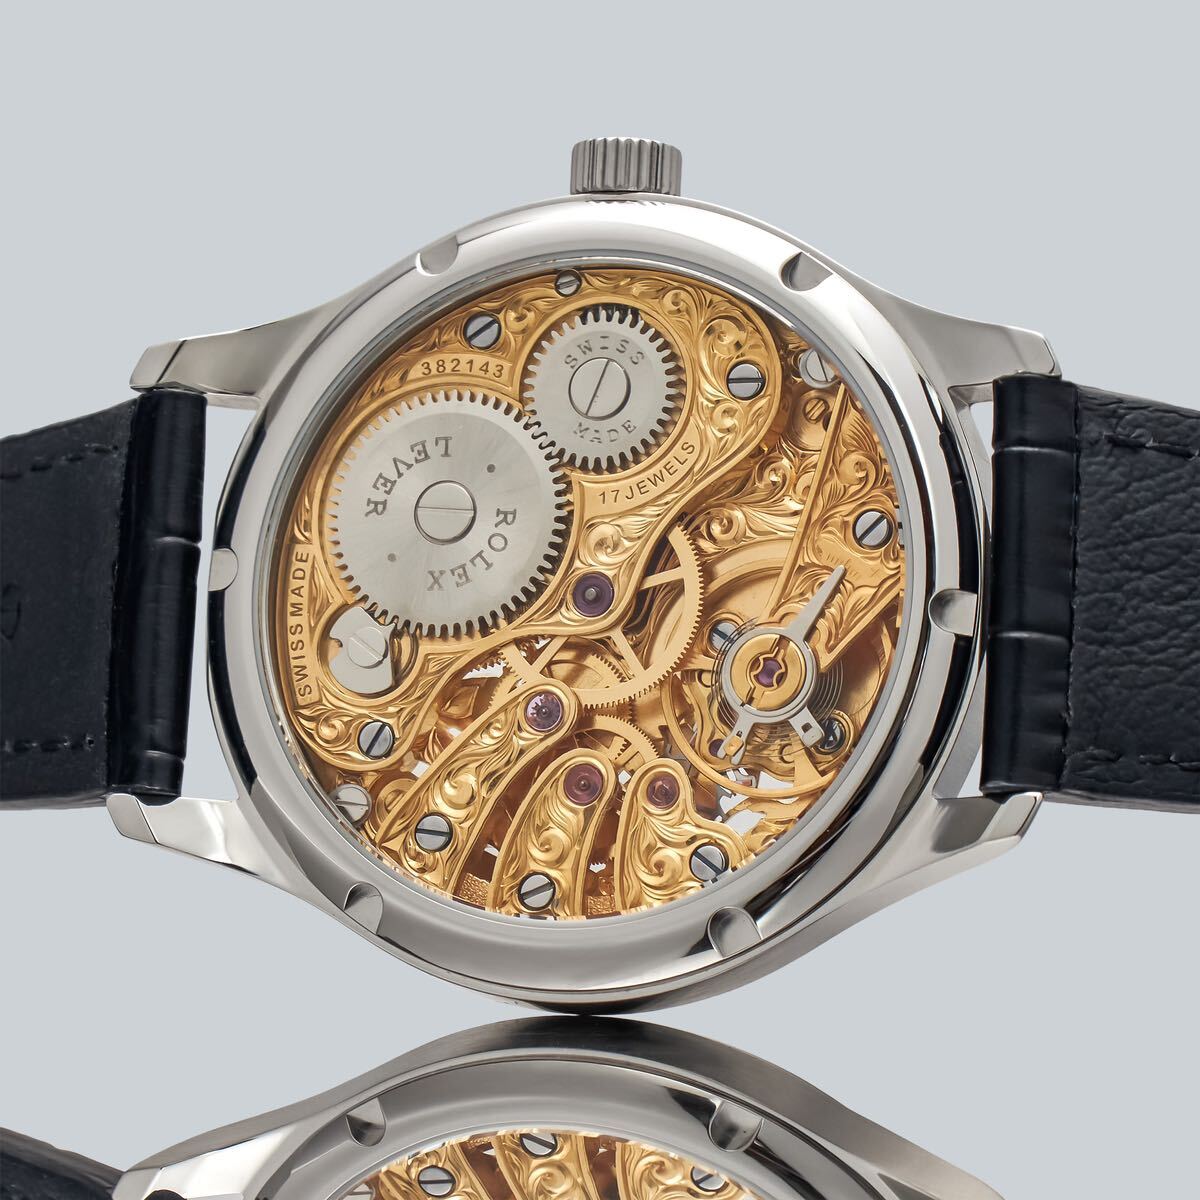 Antique Marriage Watch Rolex 44mm Men's Watch Based On A Pocket Watch Hand-wound Skeleton